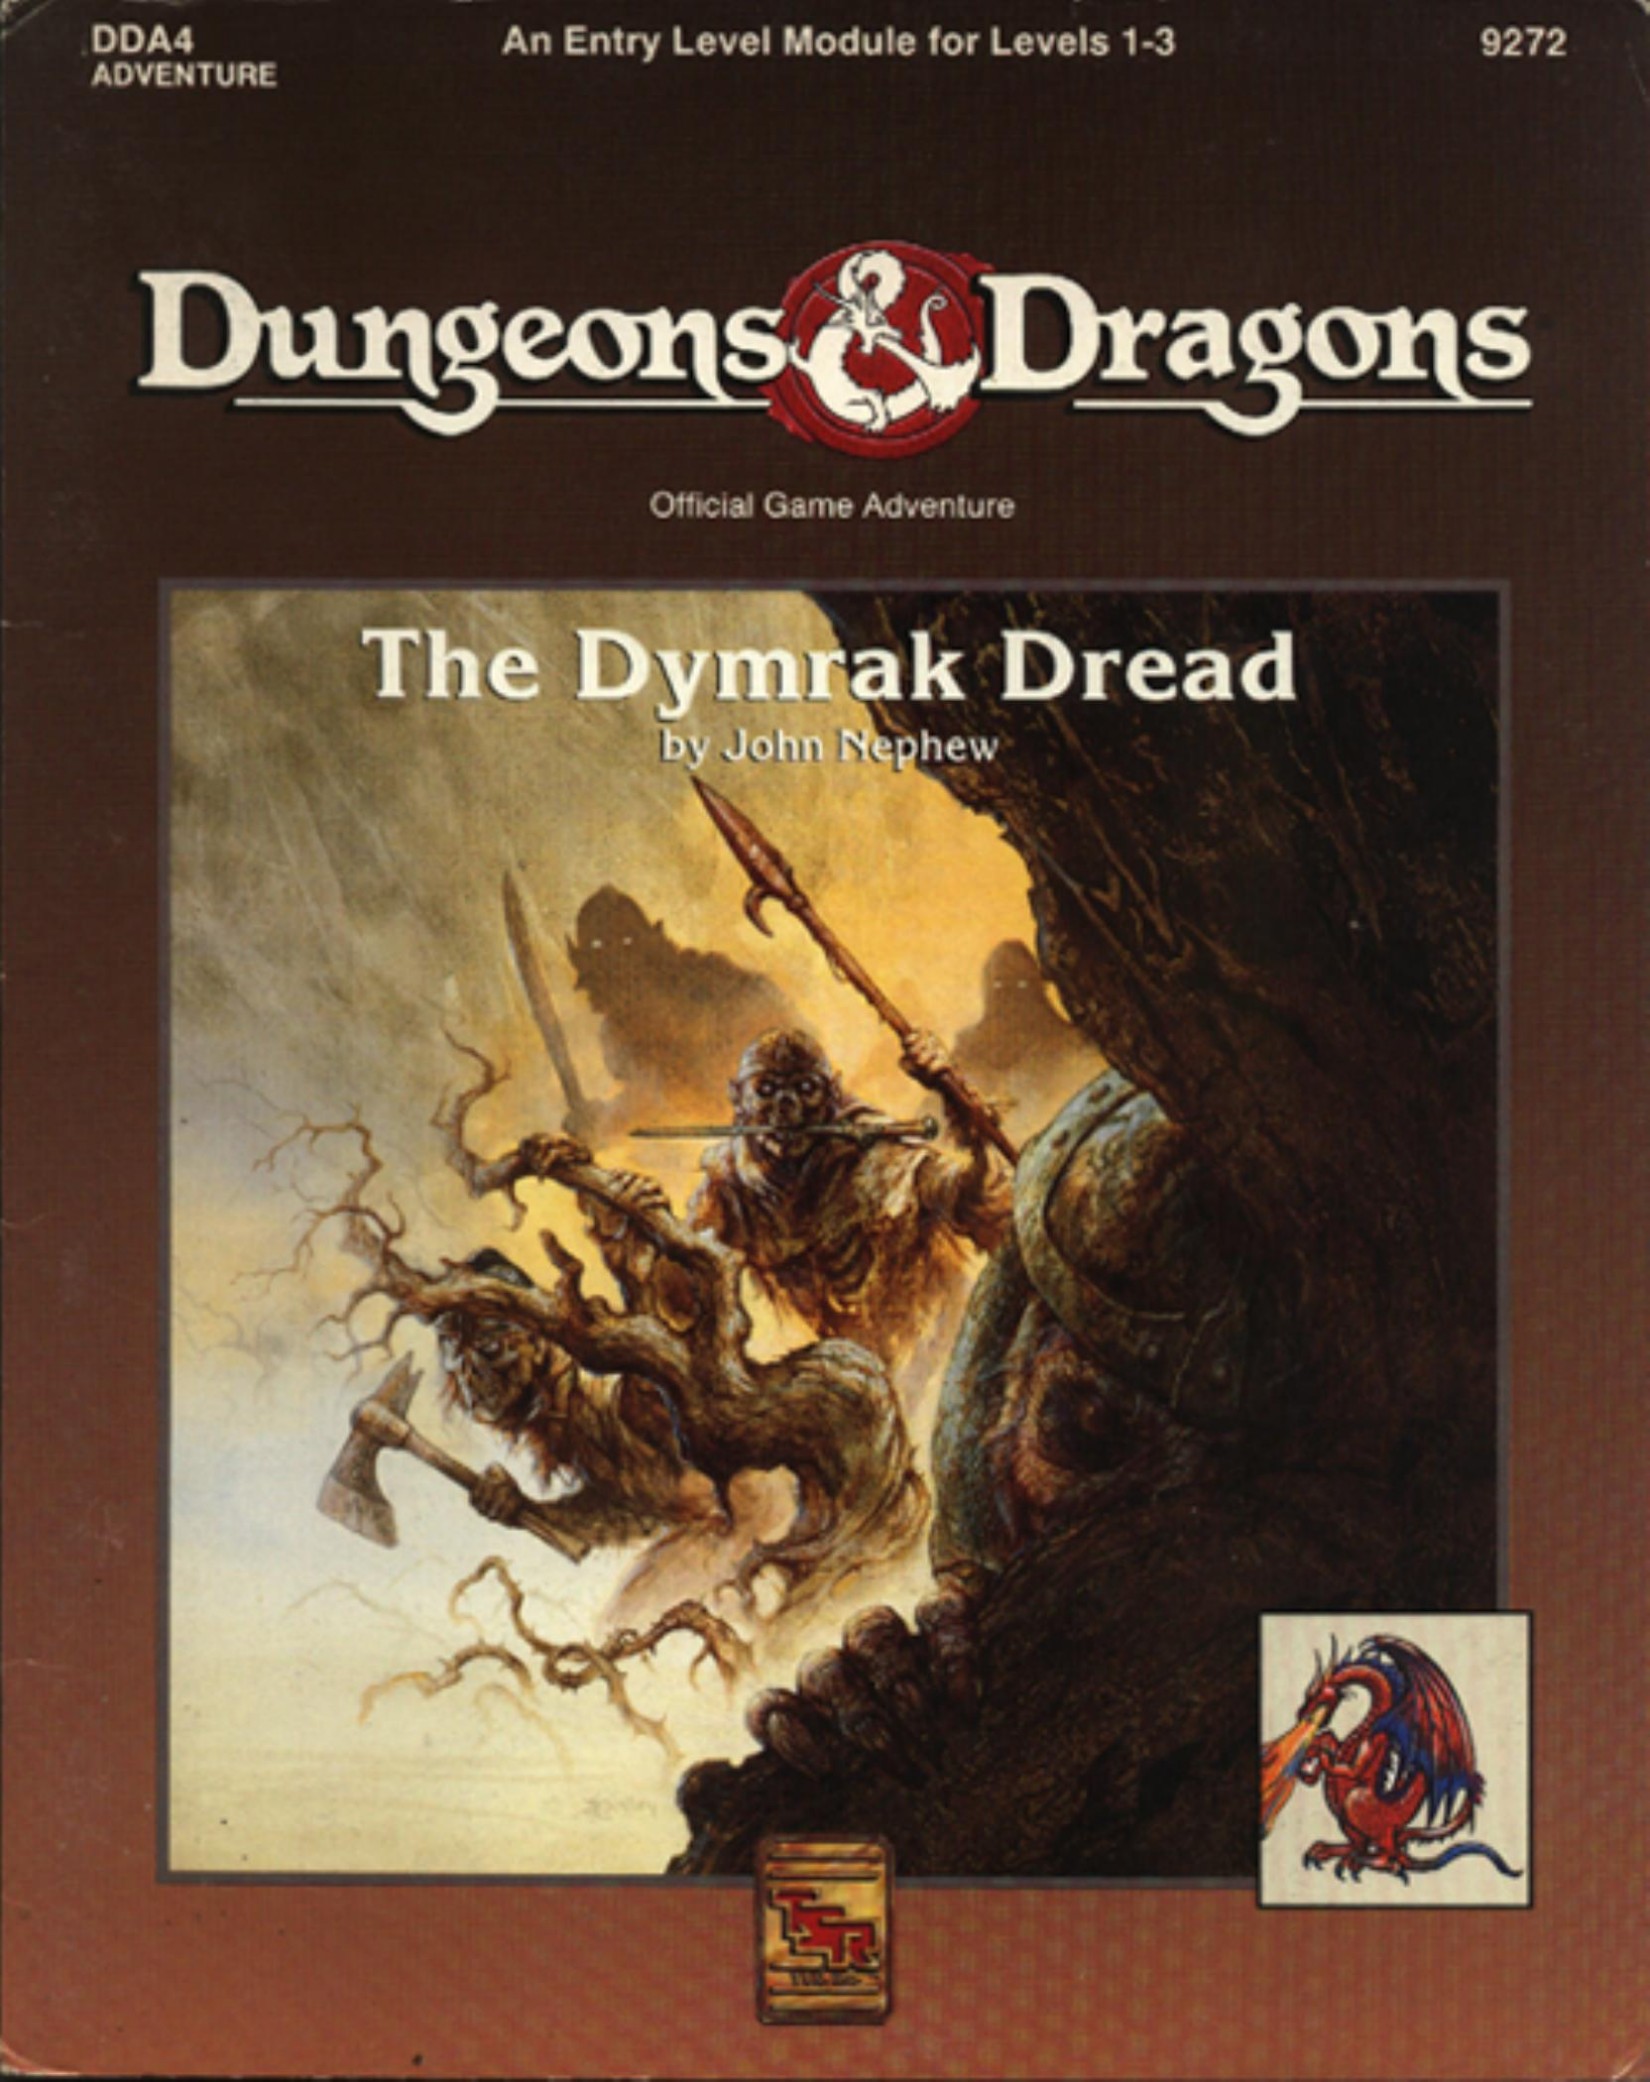 The Dymrak Dread